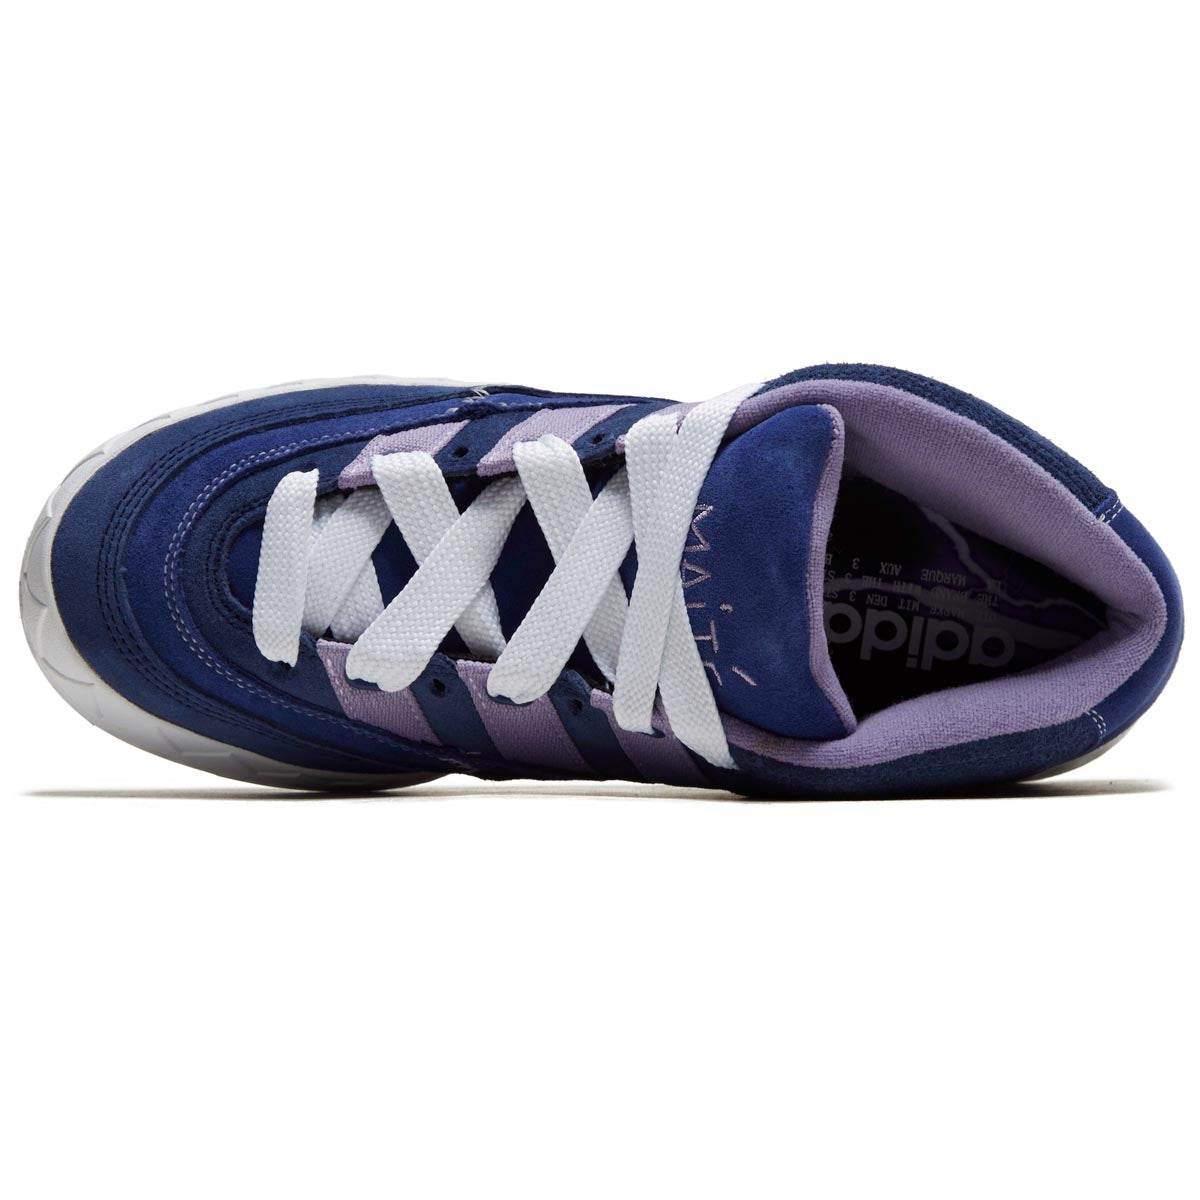 Adidas Adimatic Mid x Maite Shoes - Victory Blue/Magic Lilac/Dark Blue image 3